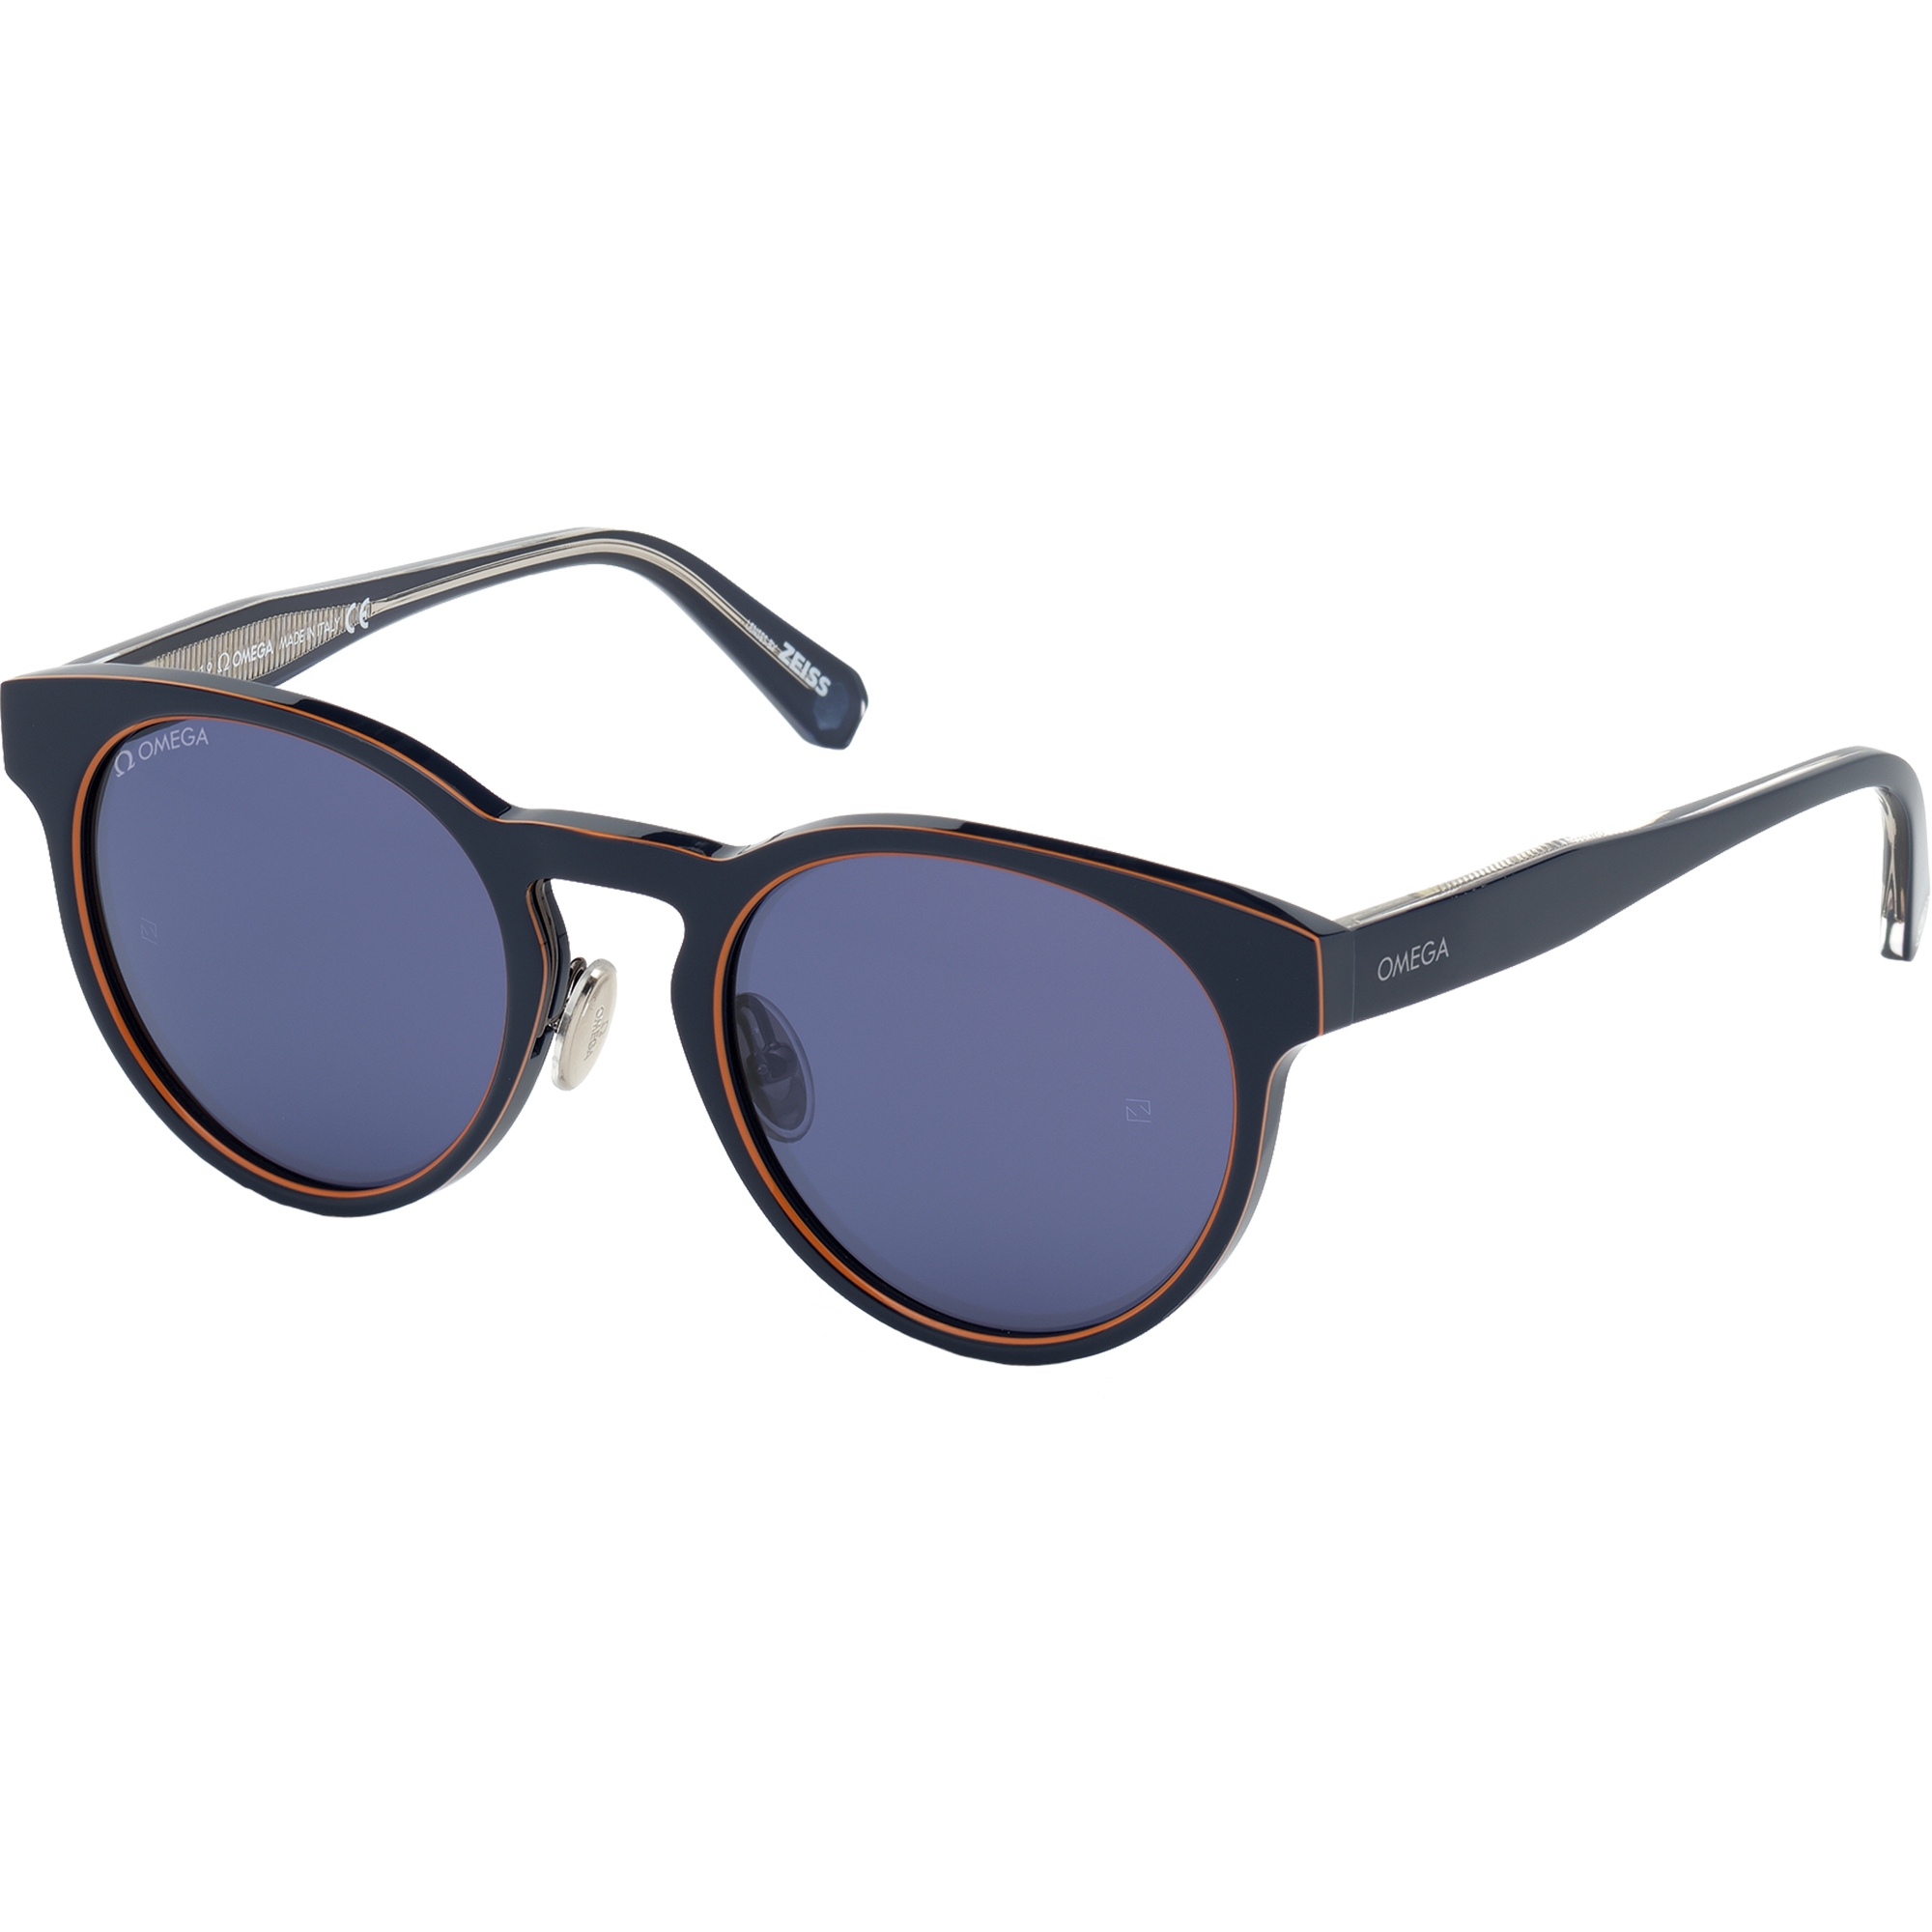 Sunglasses - Round style, Unisex - OM0020-H5290V